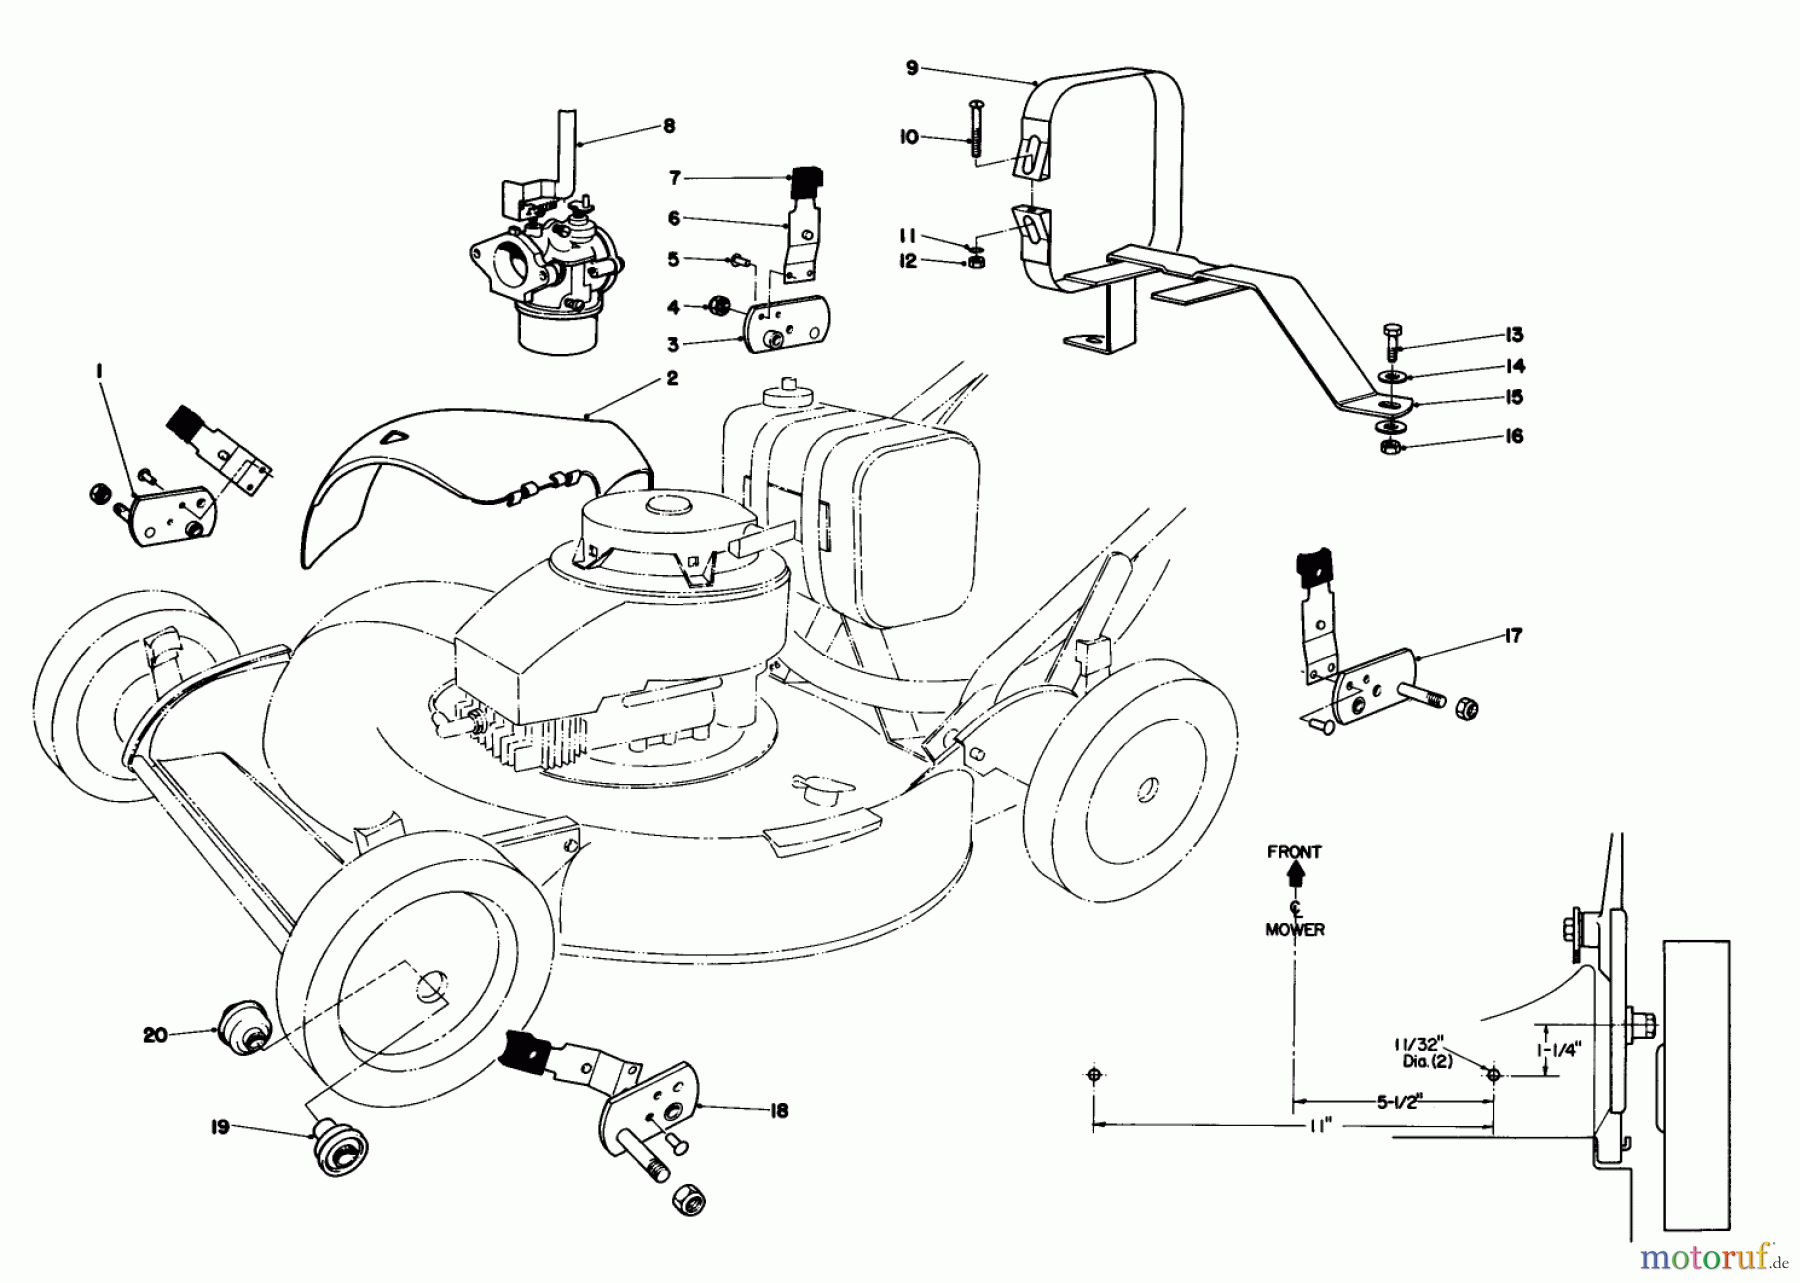  Toro Neu Accessories, Mower 39-1360 - Toro 2-Cycle Retrofit Kit, 21